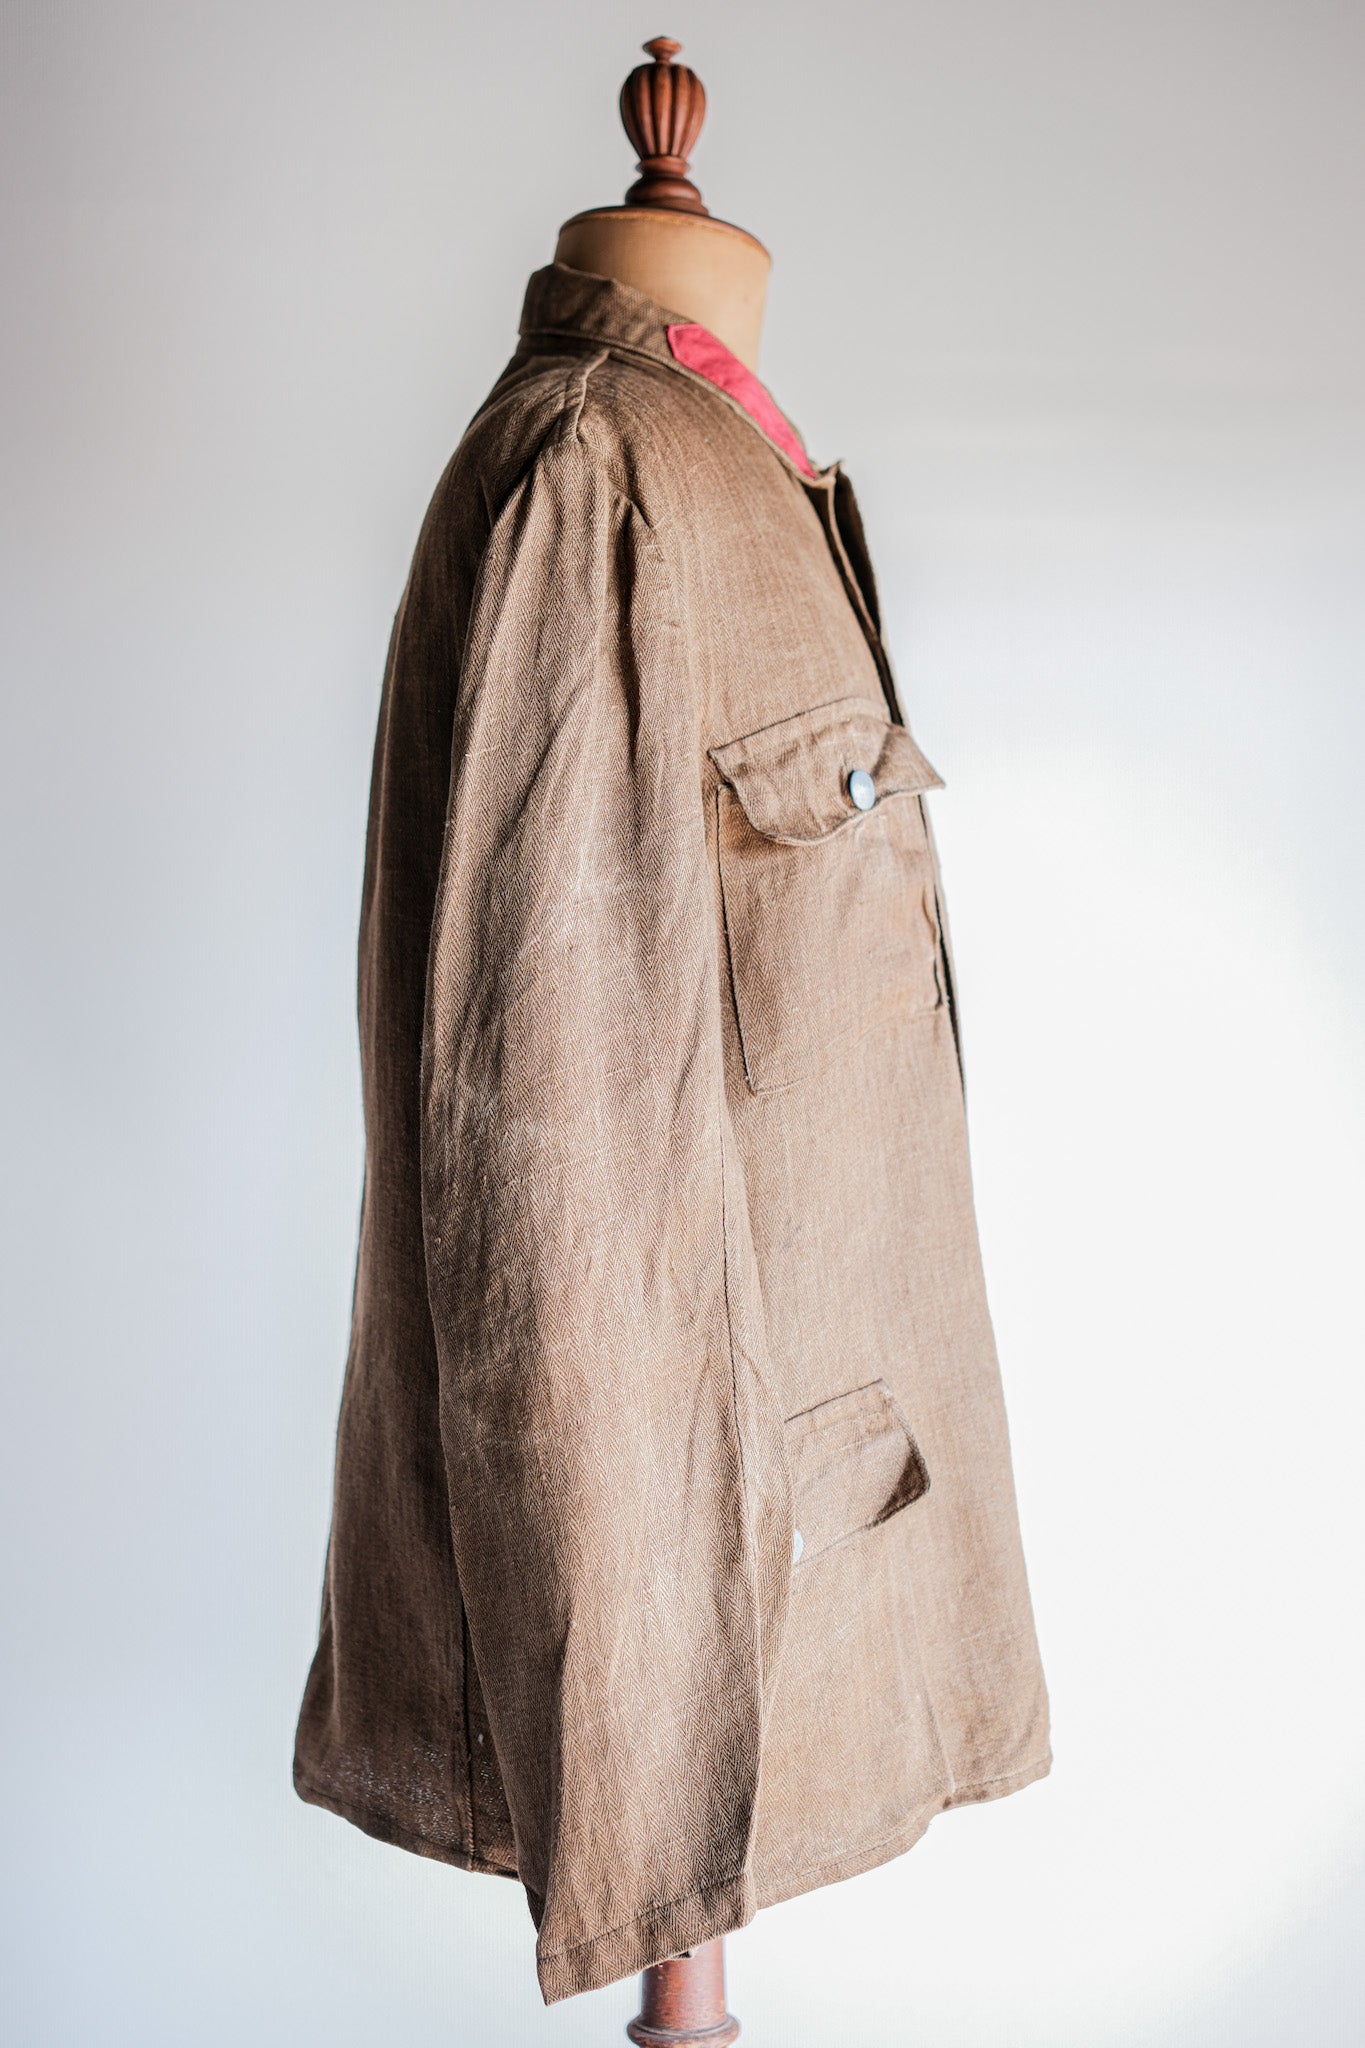 [~ 40's] WWⅡ German Army Drillich HBT Linen Jacket "Unusual Color" "Wehrmacht"